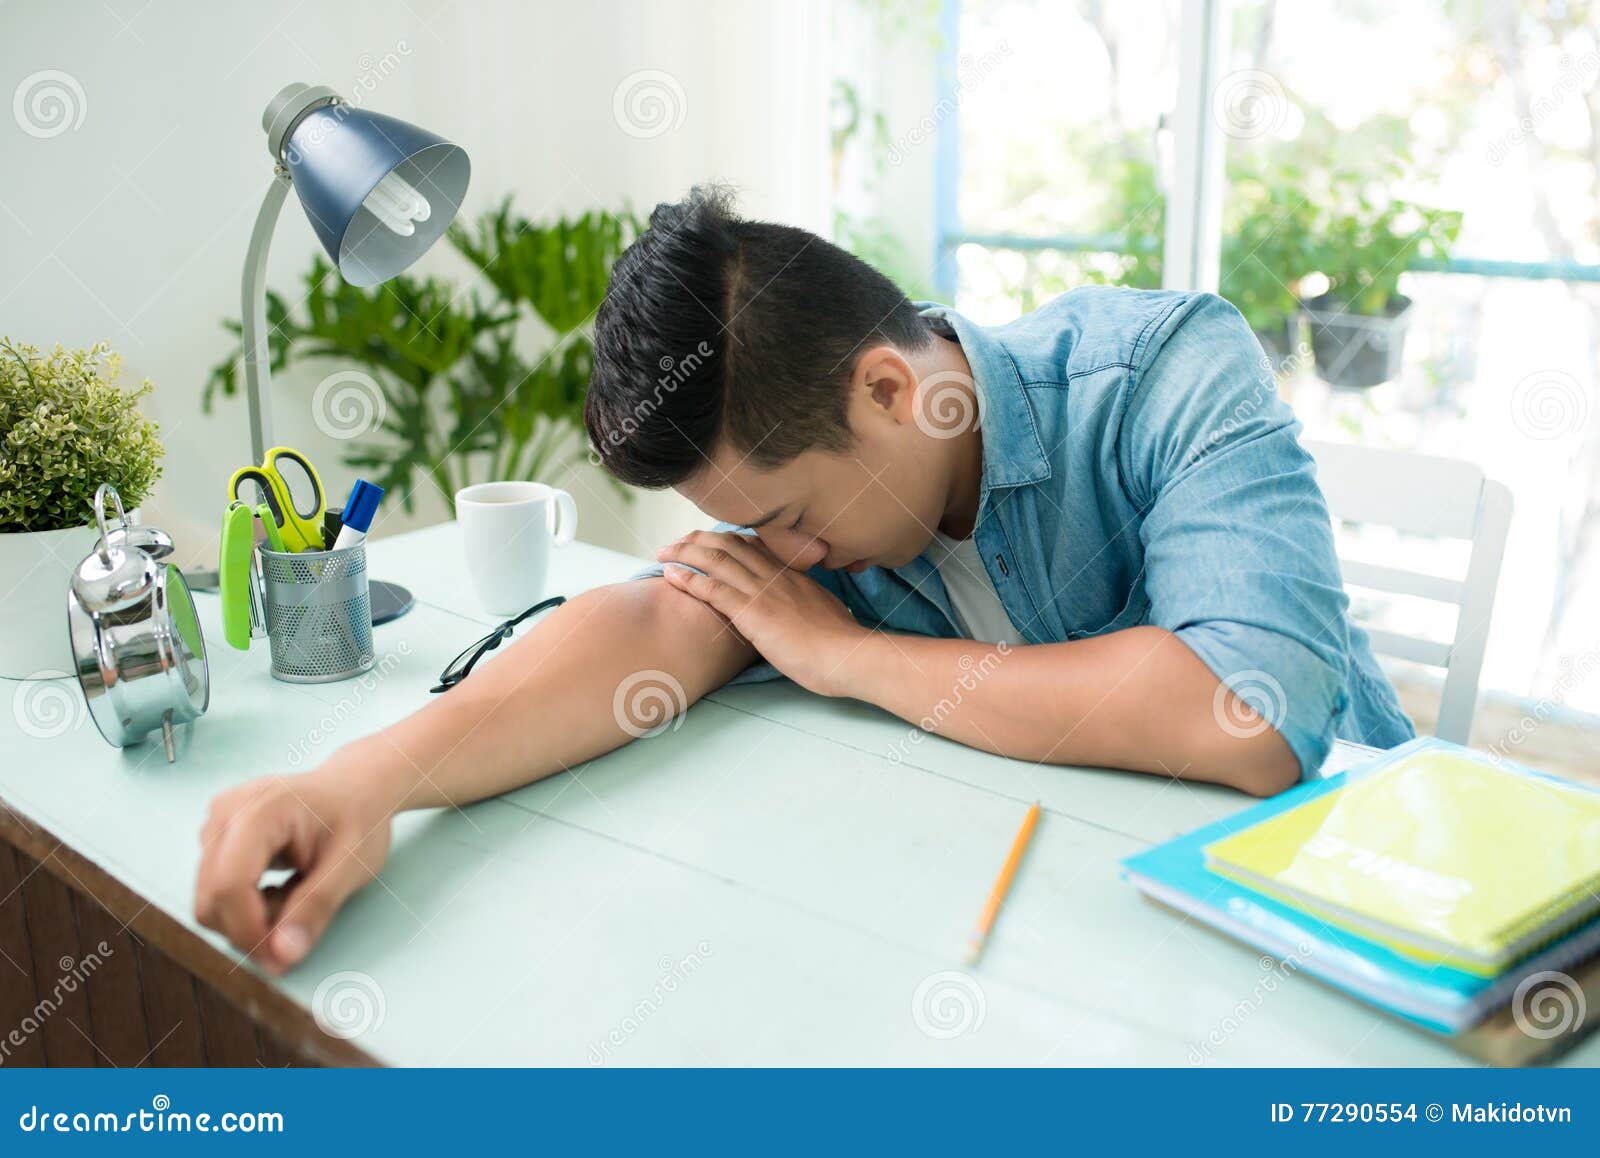 Stressed Overworked Man Studying Sleepy On Desk Stock Photo